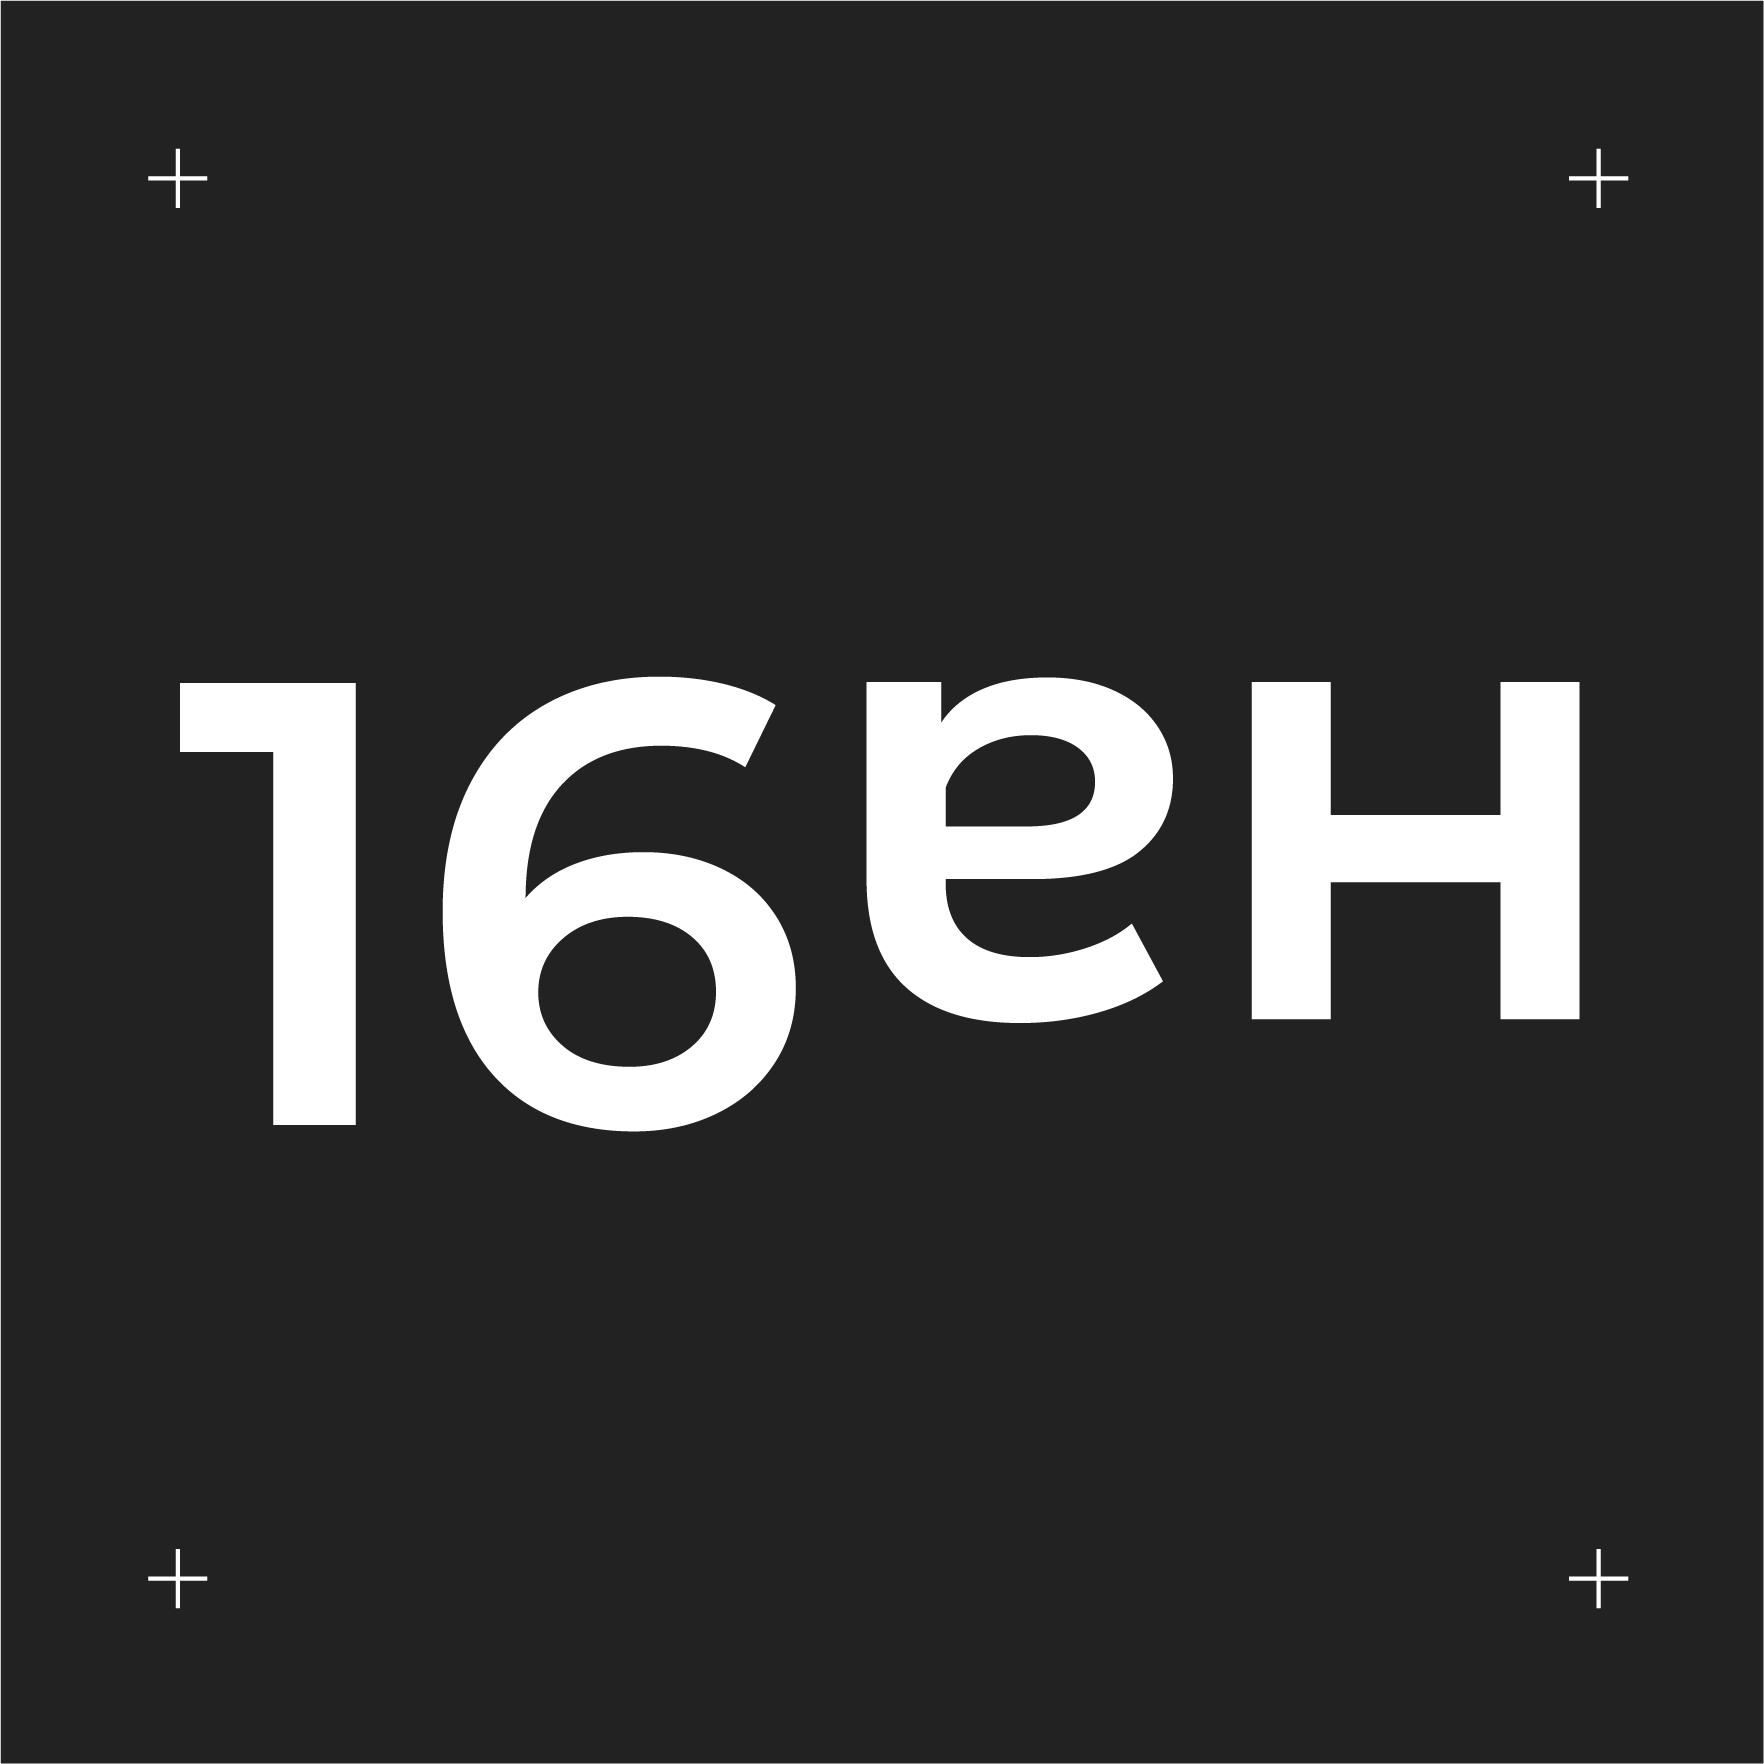 9 16 х 24. Изображение 16 на 9. Шестнадцать. 16:16. Шестнадцать на девять канал логотип.